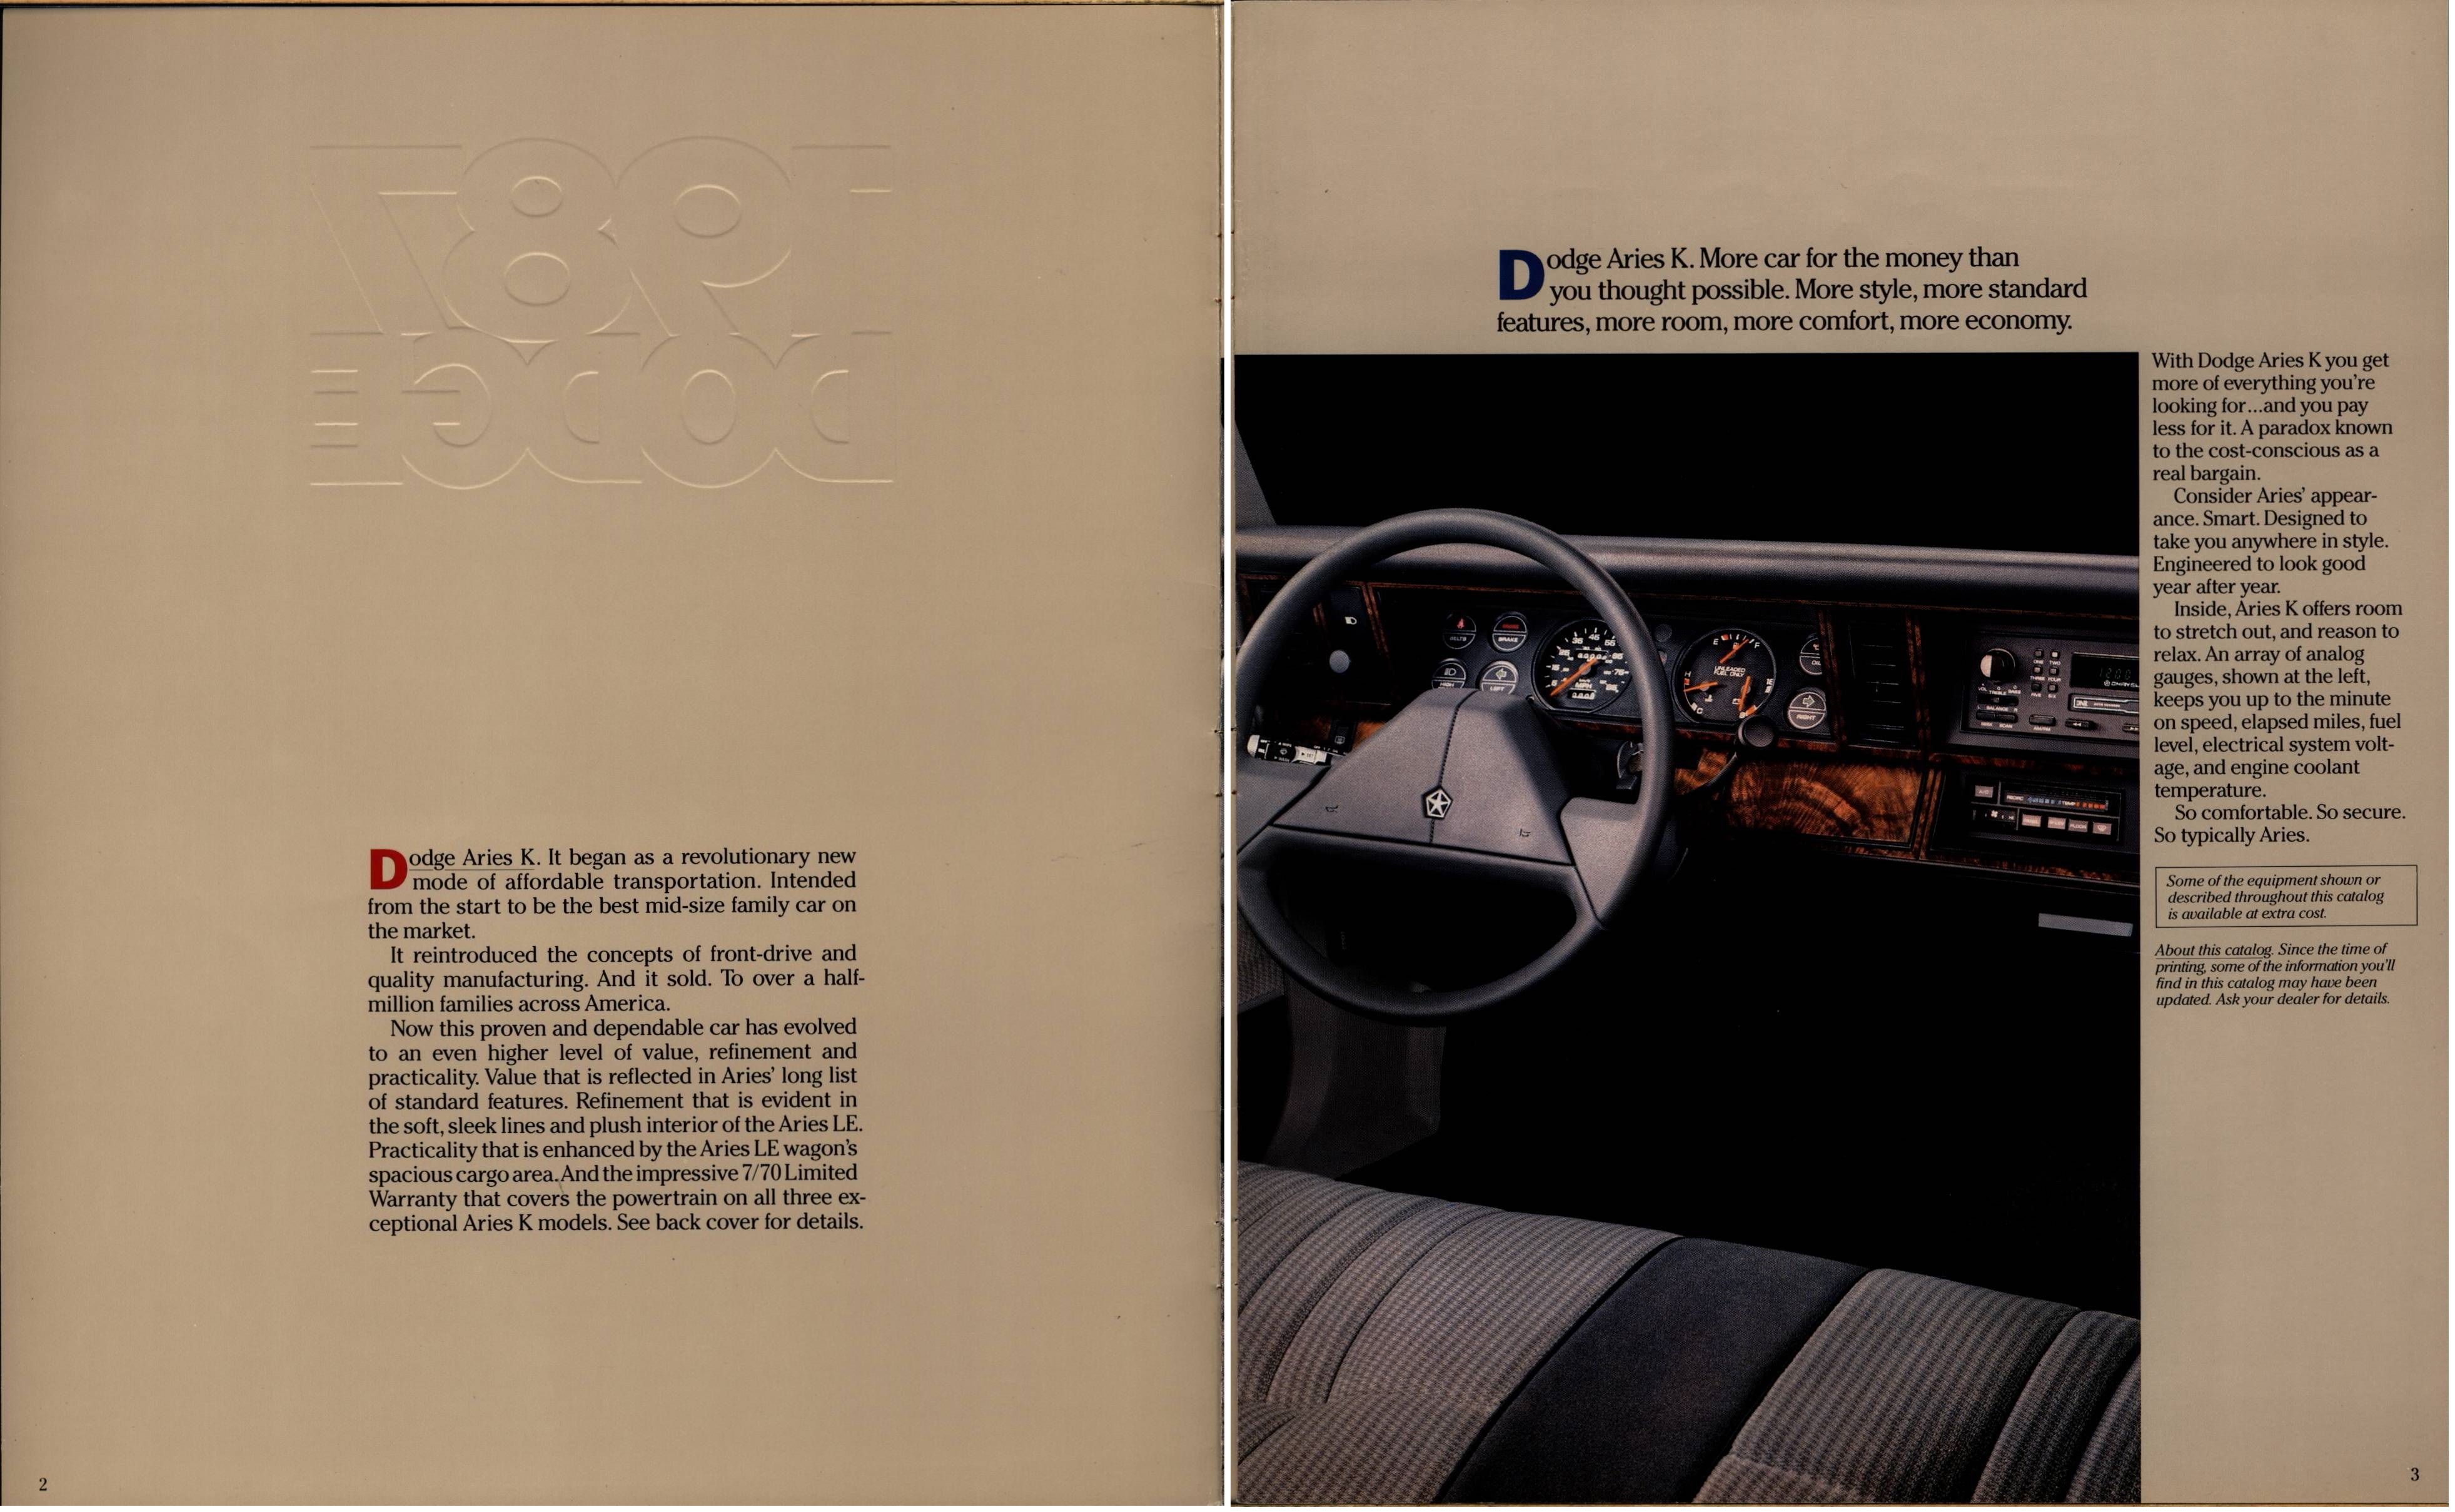 1987 Dodge Aries K Brochure (Rev) 02-03